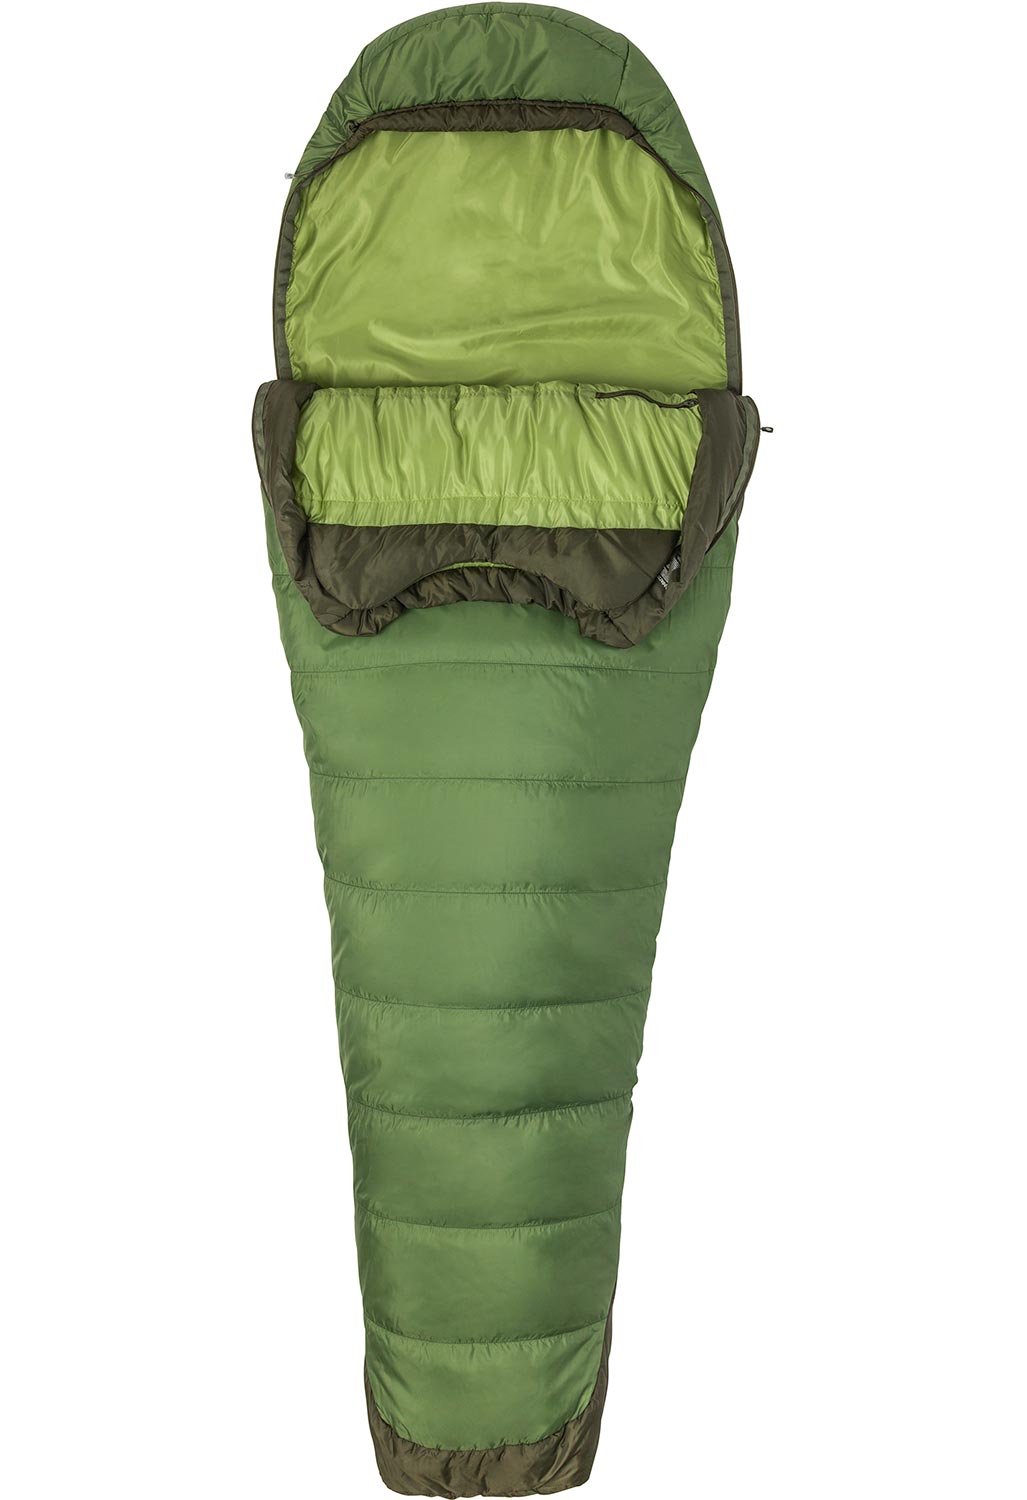 Marmot Trestles Elite Eco 30 Long Sleeping Bag - Vine Green/Forest Night